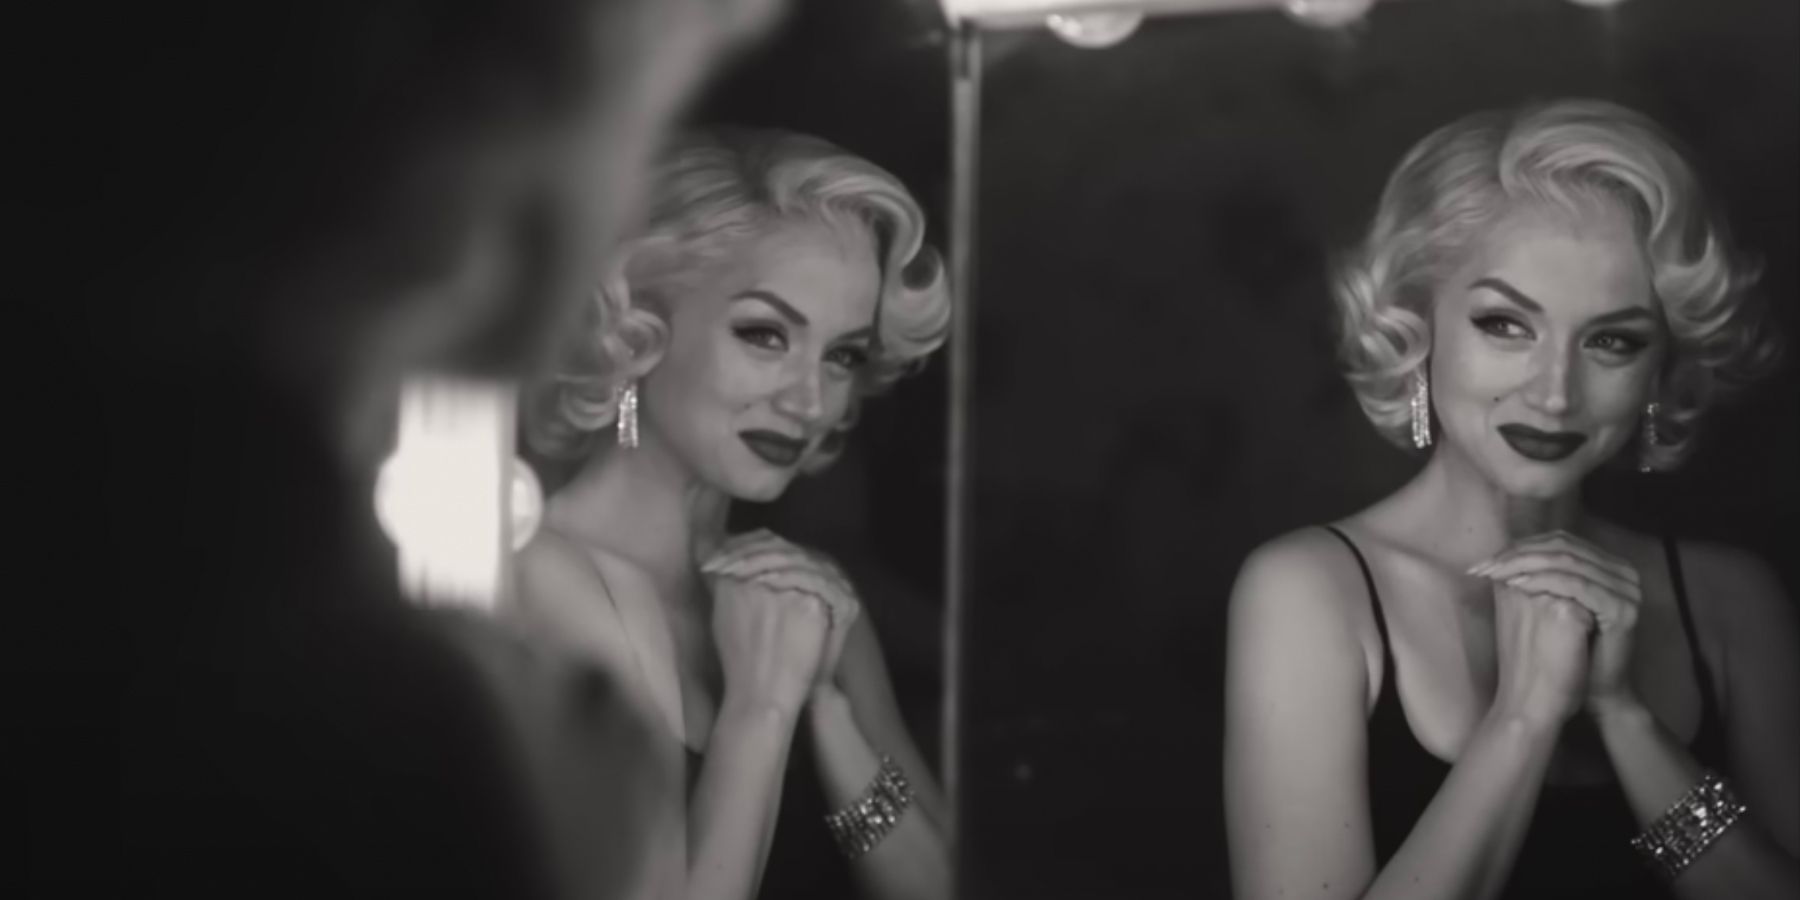 Ana De Armas Becomes Marilyn Monroe In Stunning New Blonde Photos